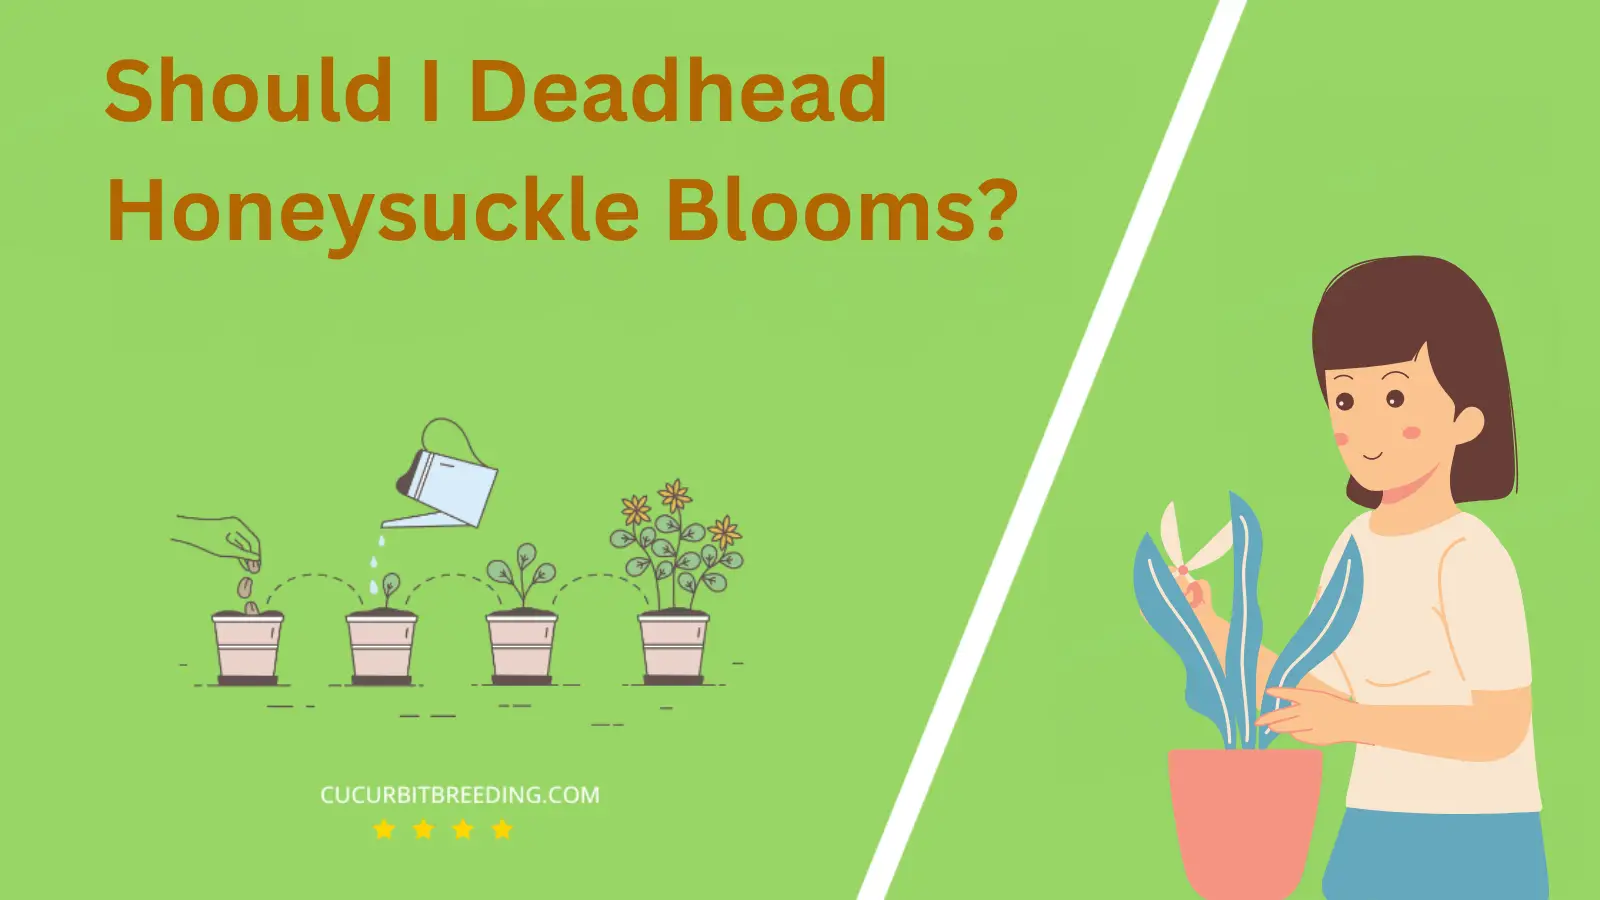 Should I Deadhead Honeysuckle Blooms?